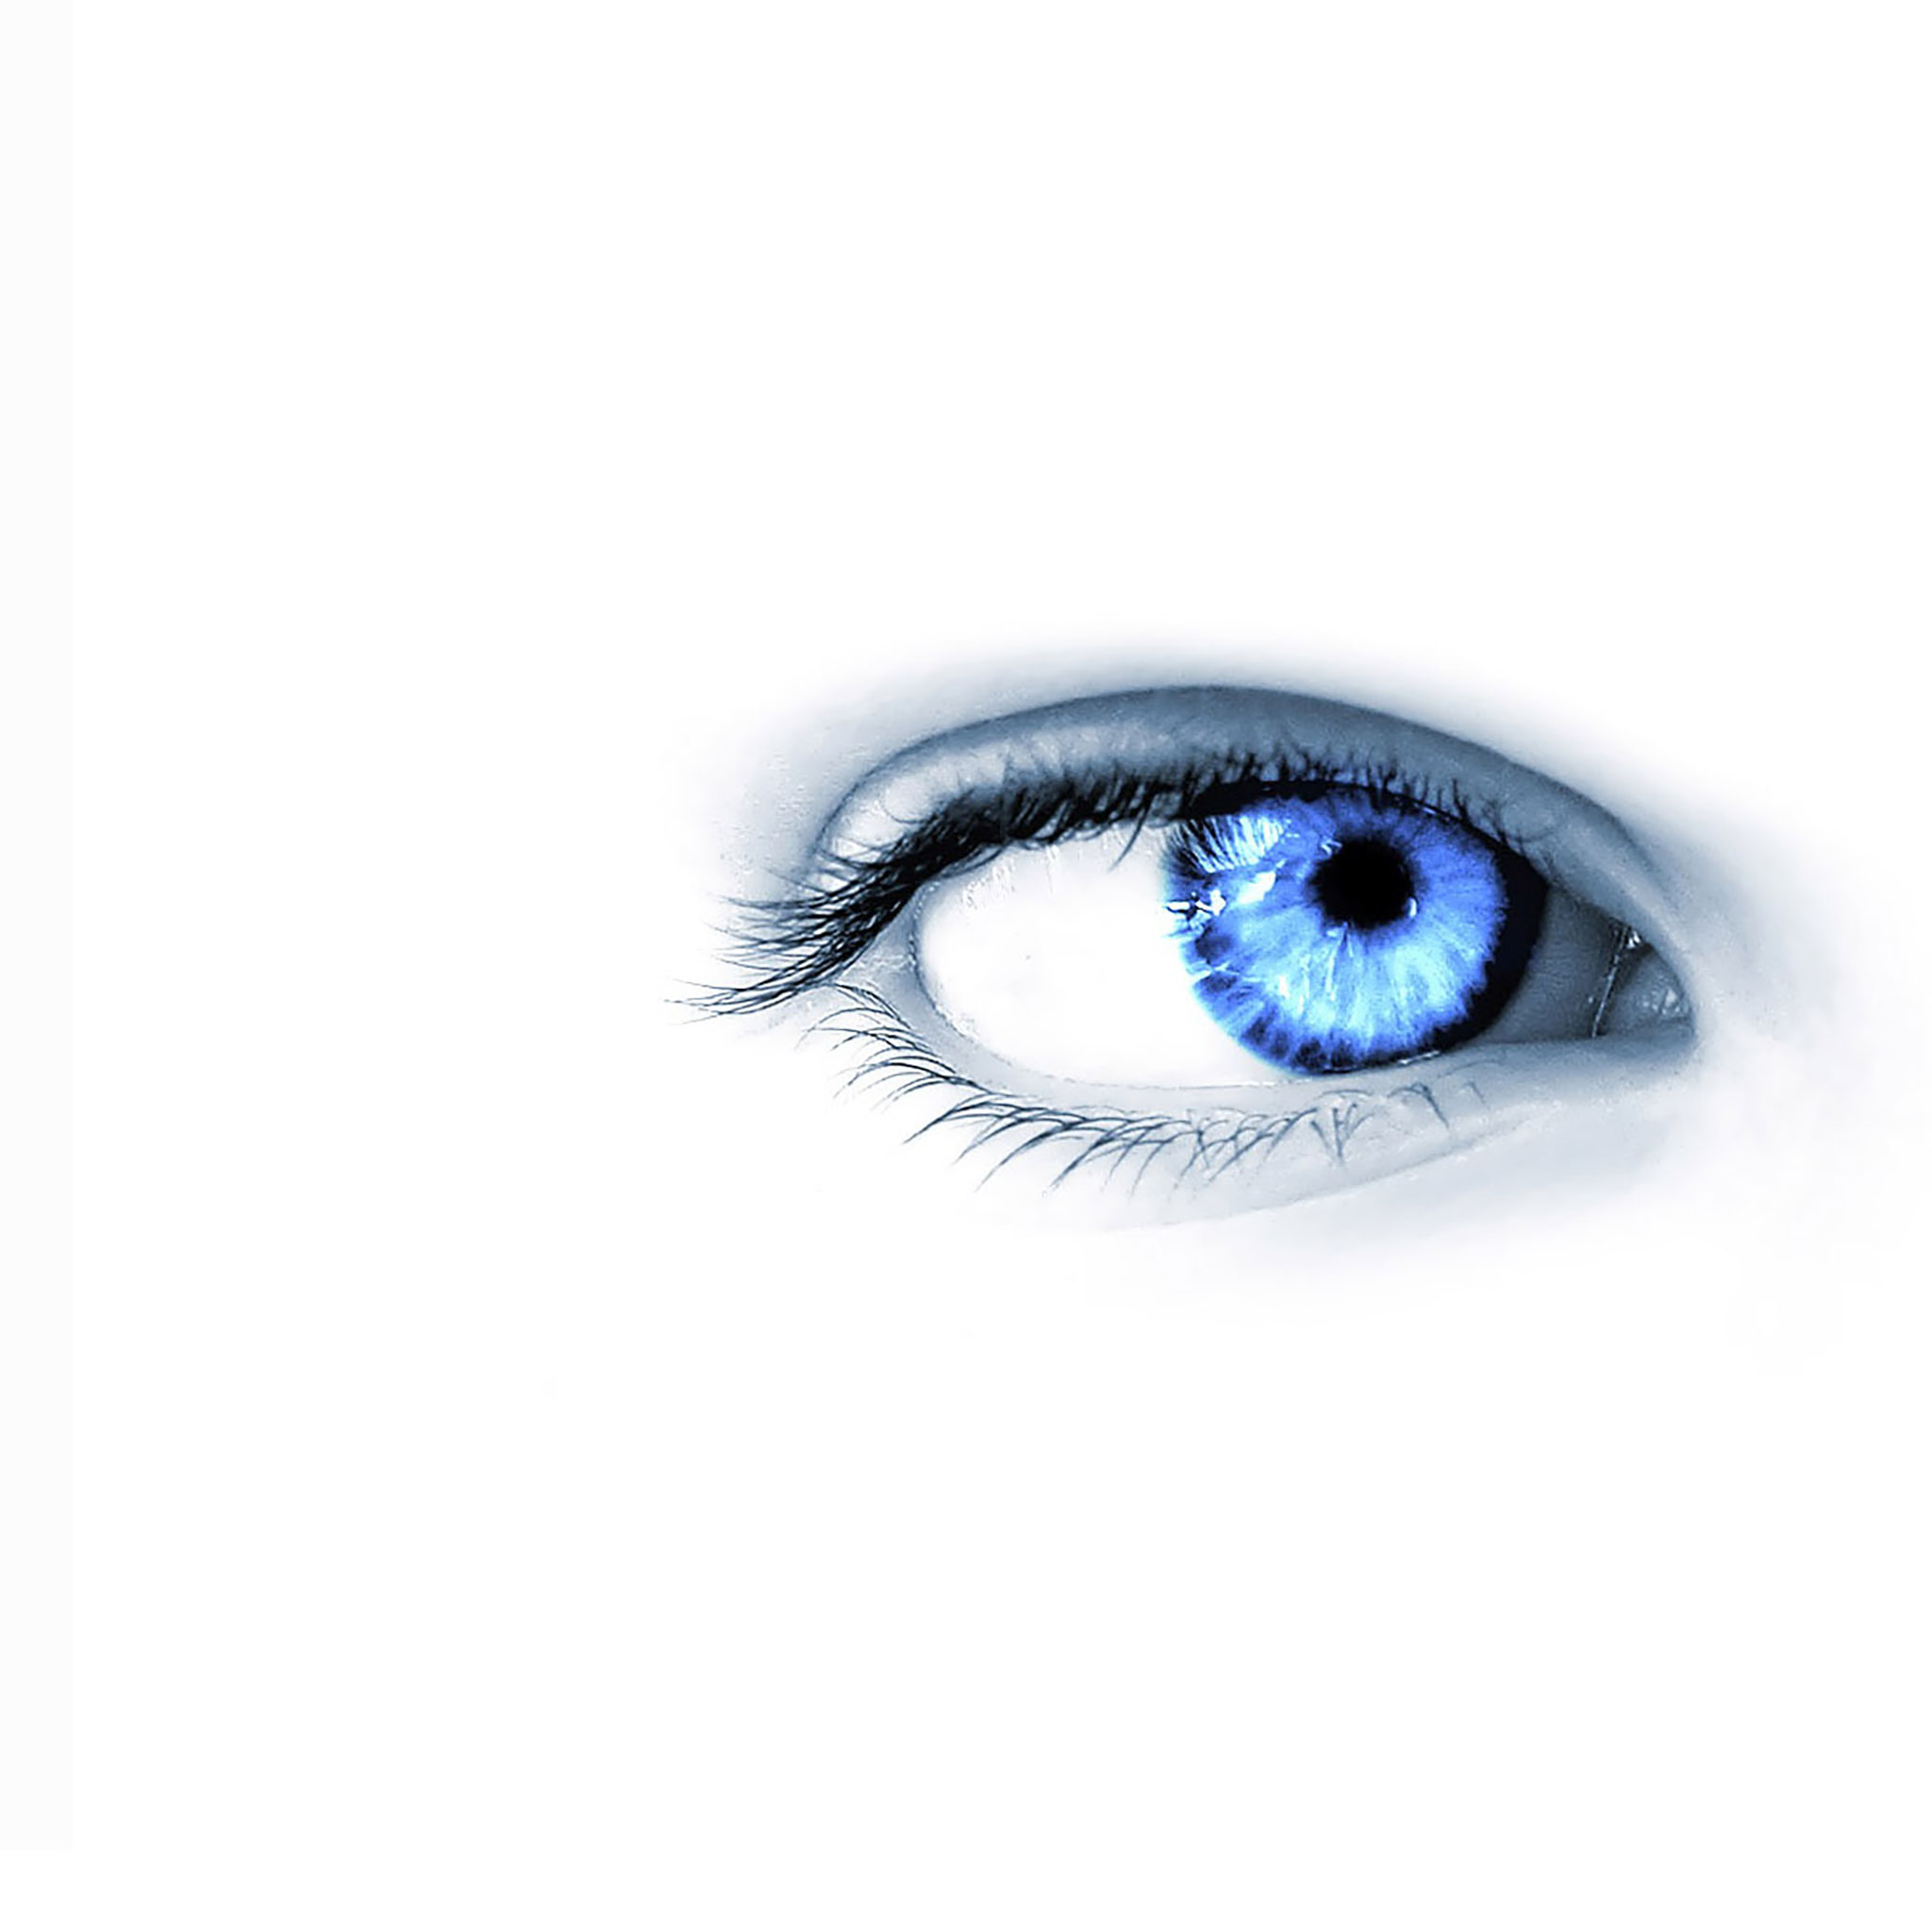 white ipad wallpaper,eye,blue,eyelash,eyebrow,iris